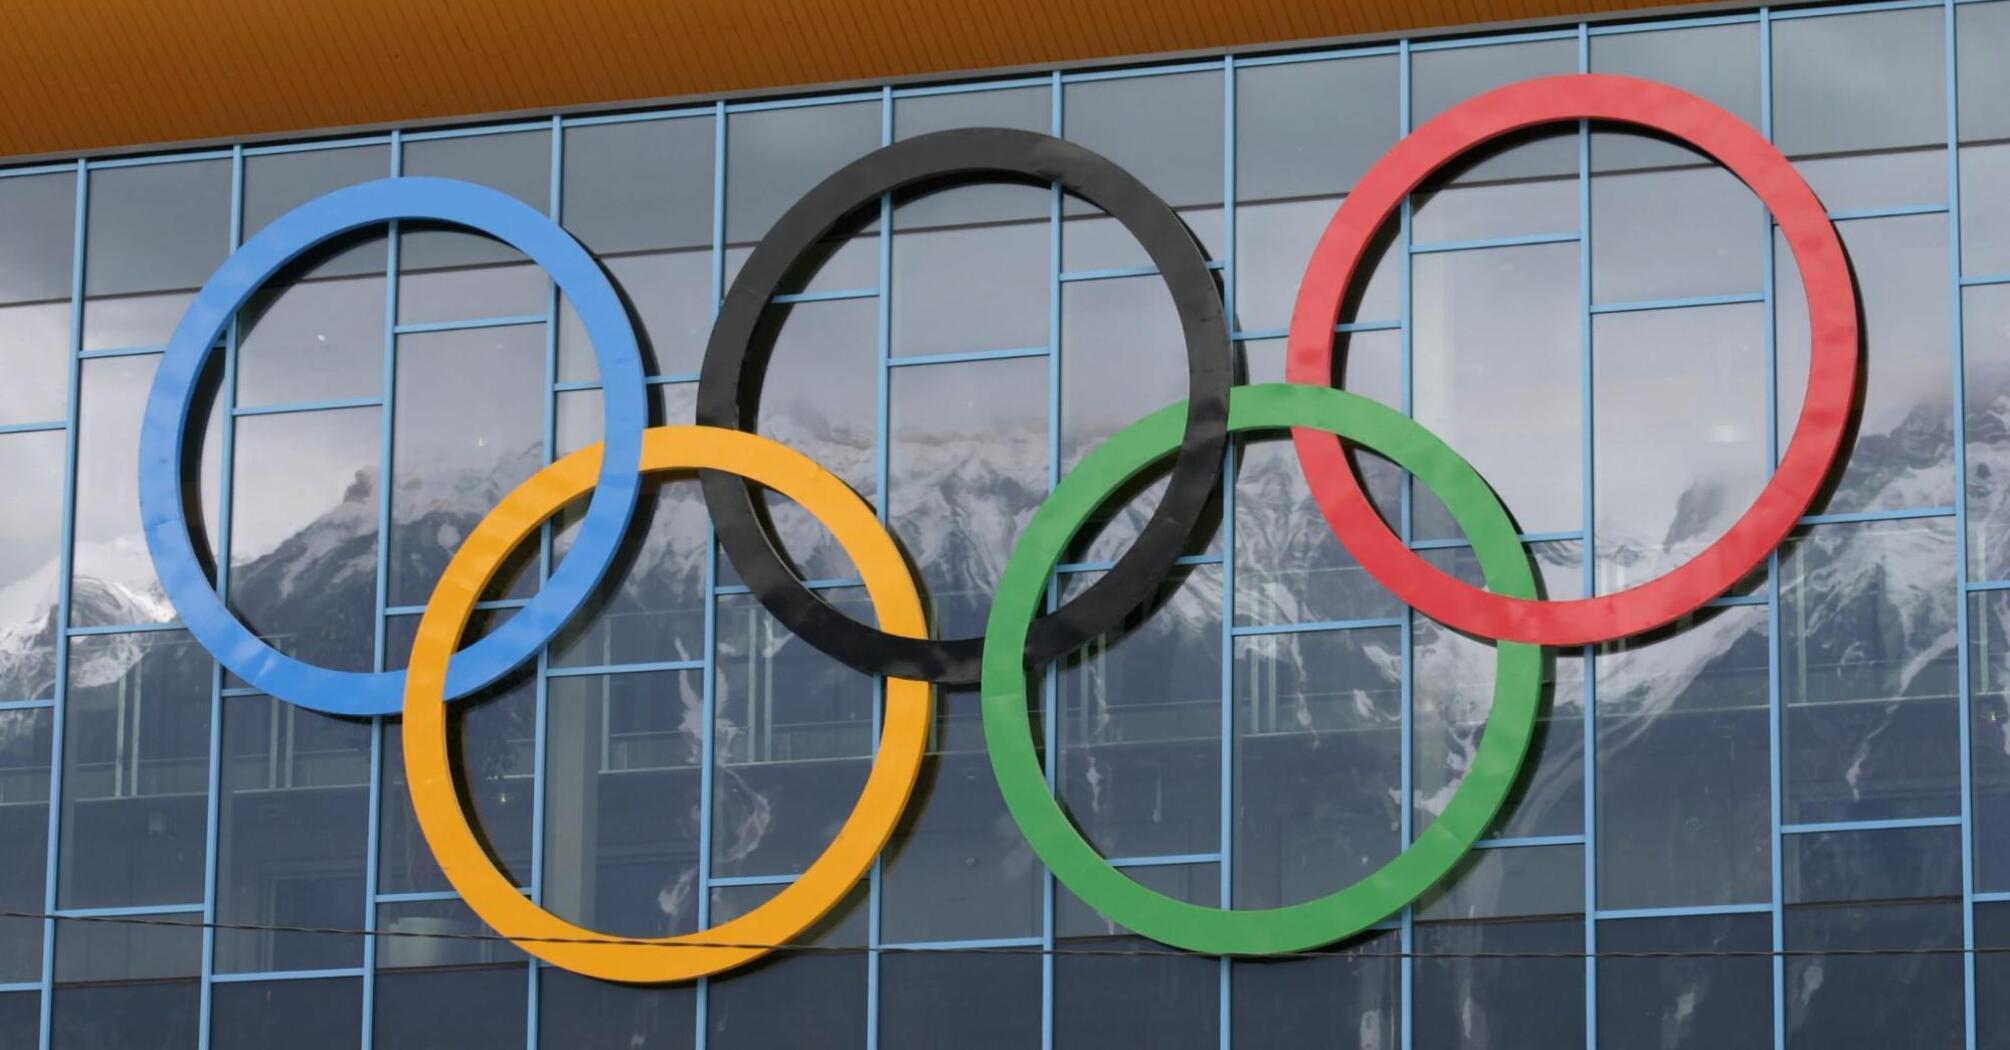 Main Olympic symbolic games